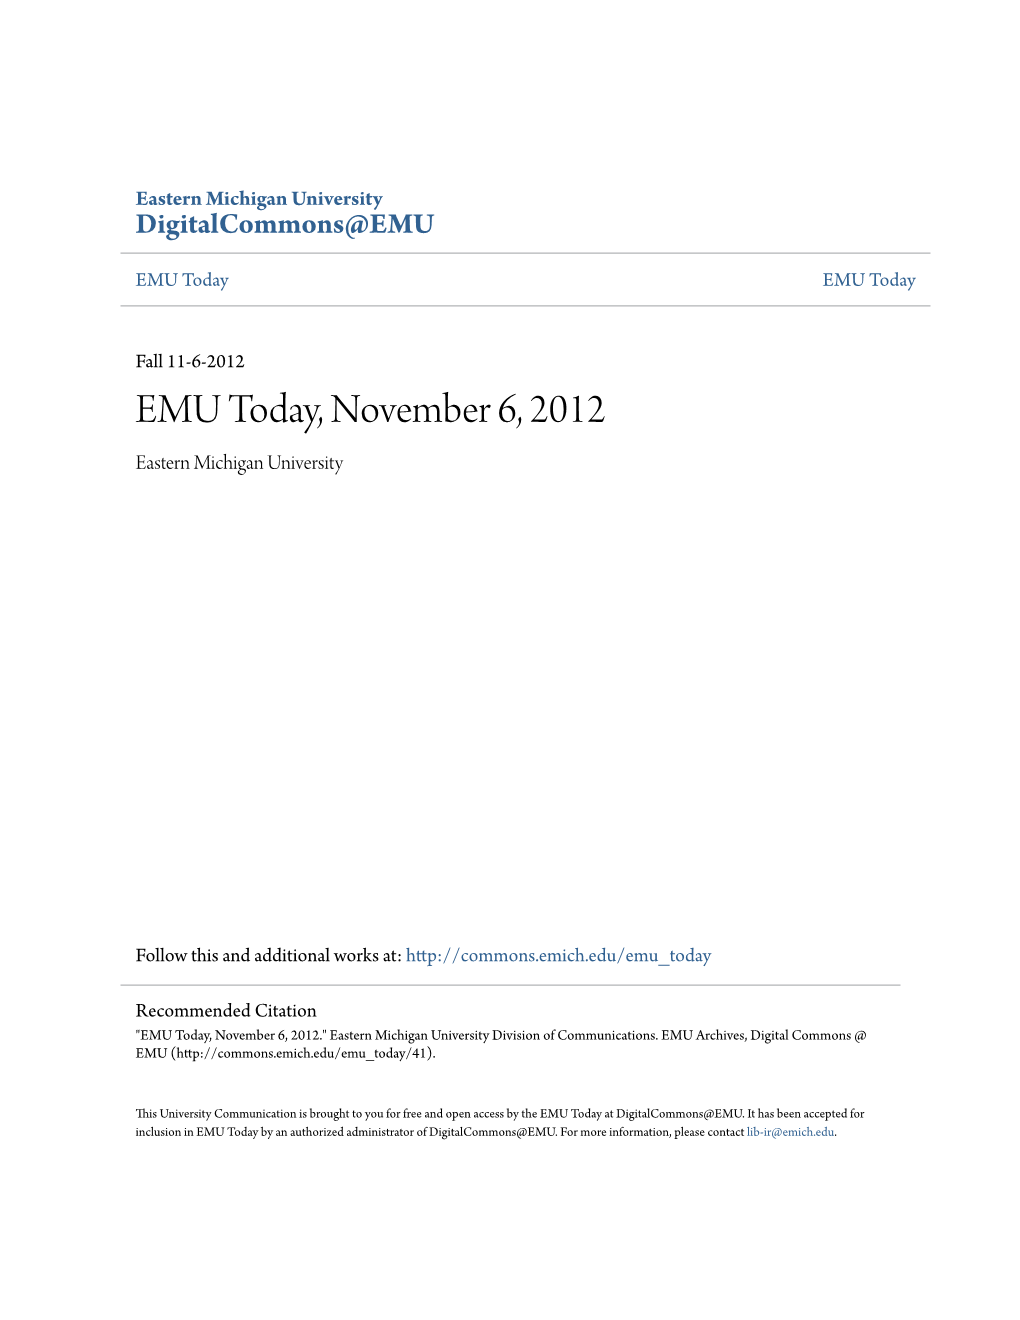 EMU Today, November 6, 2012 Eastern Michigan University